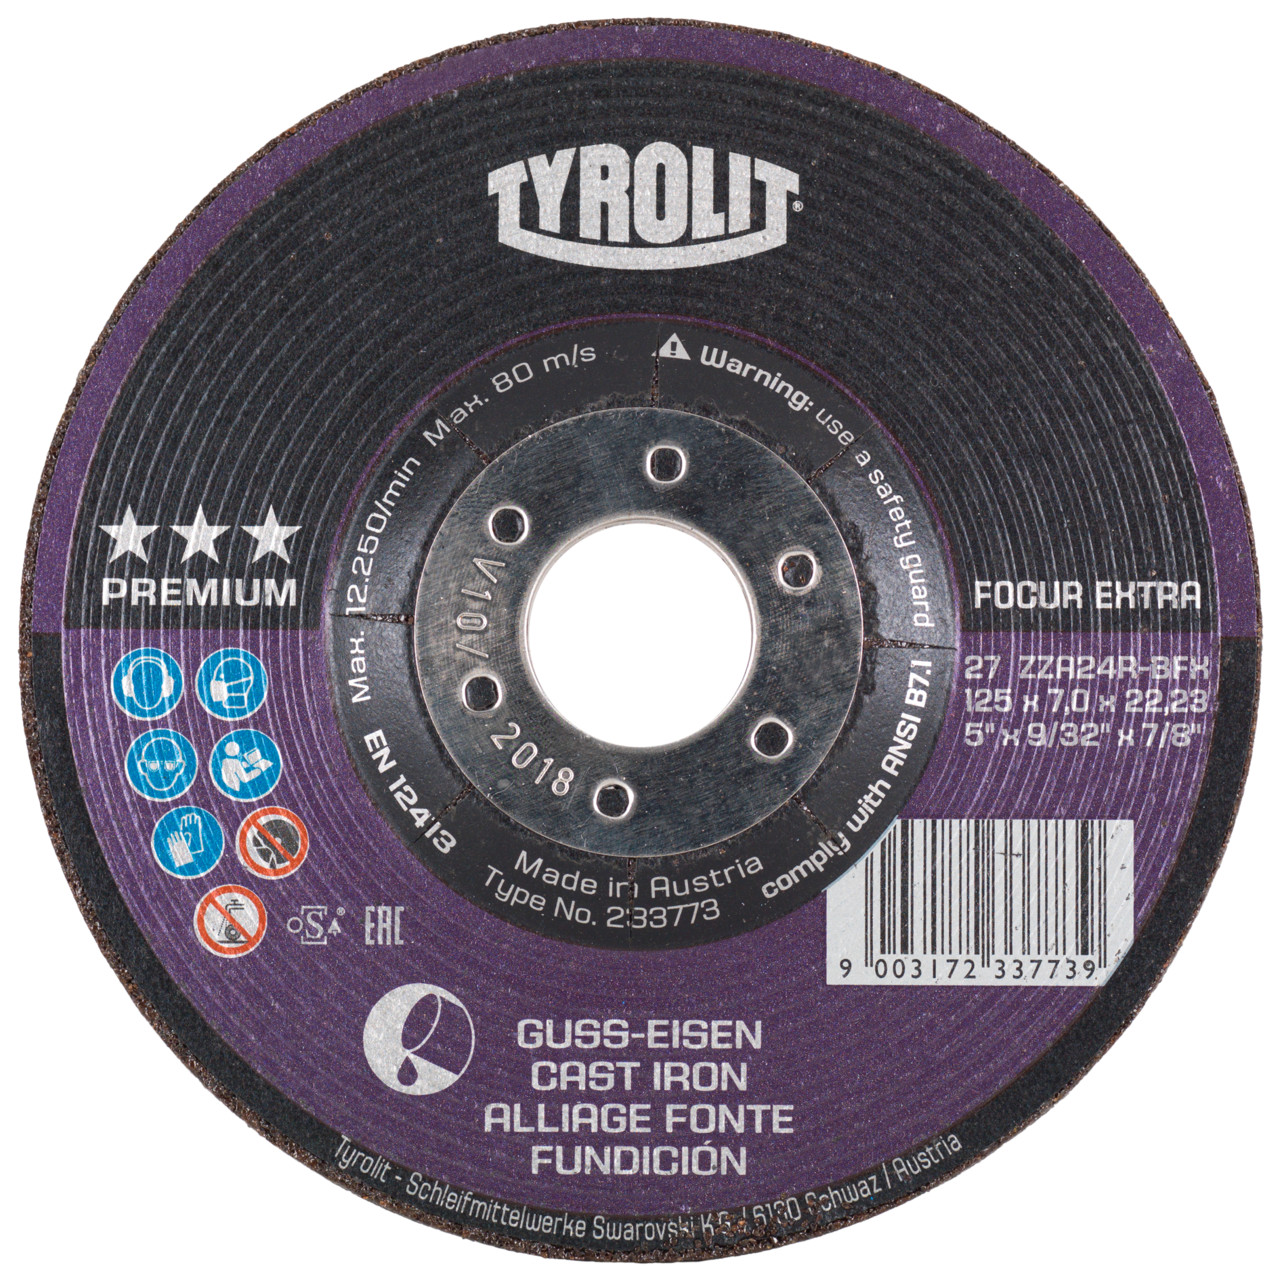 Tyrolit Roughing disc DxUxH 125x7x22.23 FOCUR Extra for cast iron, shape: 27 - offset version, Art. 233765